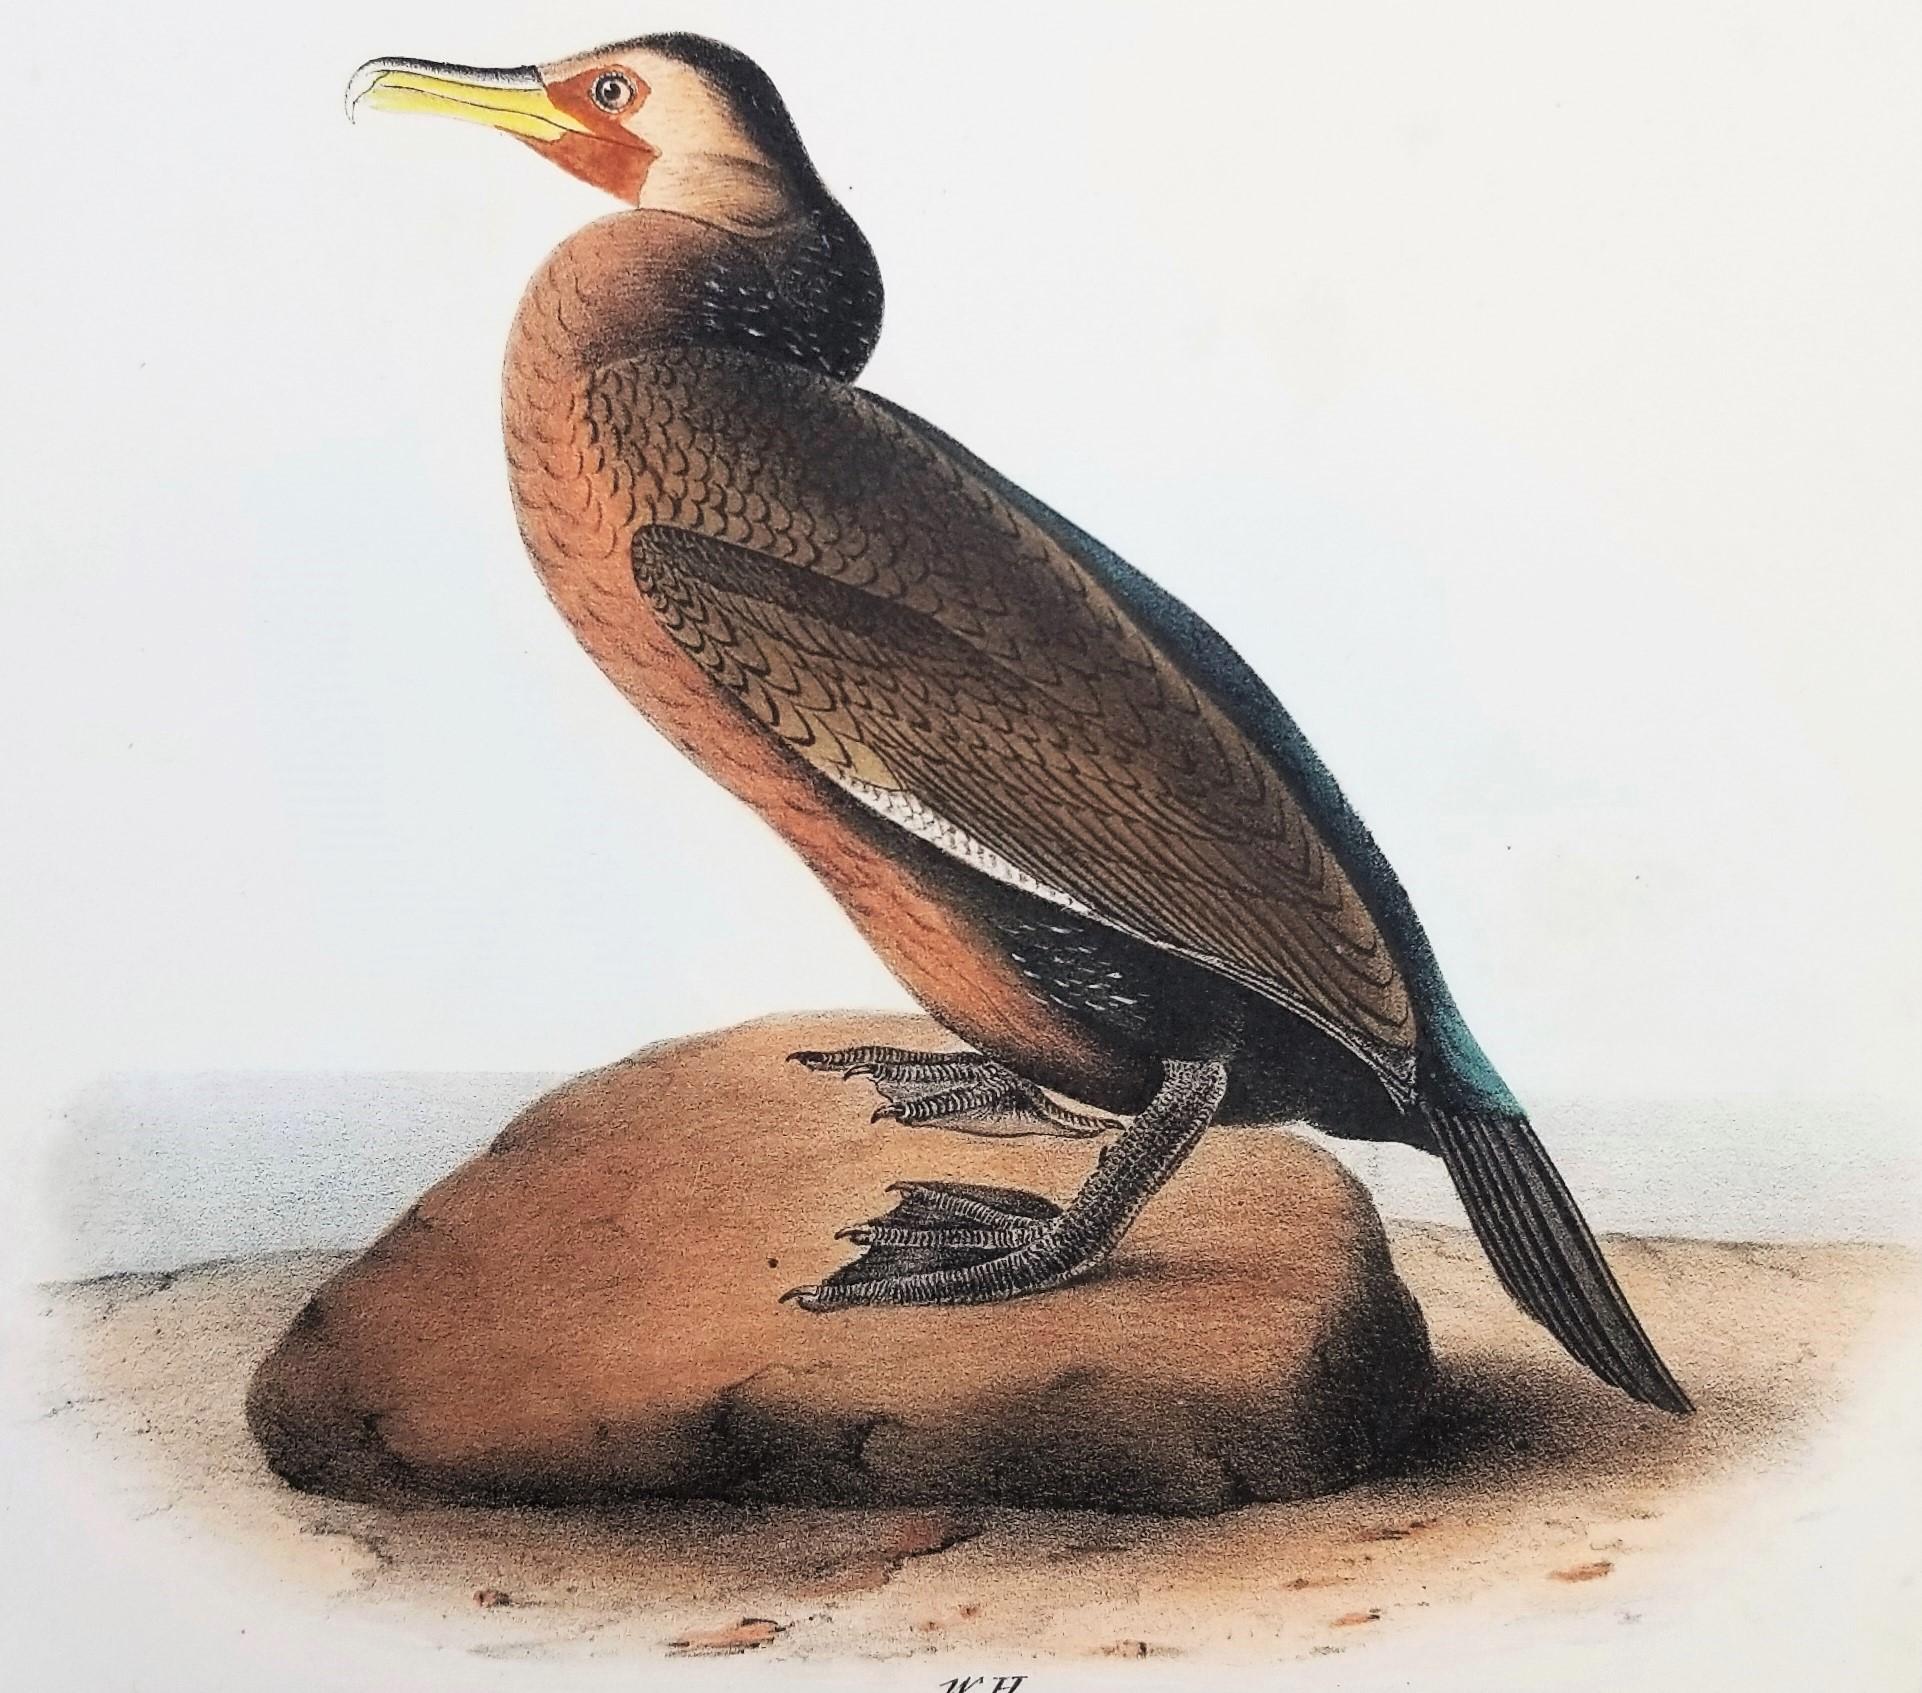 Artist: John James Audubon (American, 1785-1851)
Title: "Townsend's Cormorant" (Plate 418, No. 84)
Portfolio: The Birds of America, First Royal Octavo Edition
Year: 1840-1844
Medium: Original Hand-Colored Lithograph on wove paper
Limited edition: